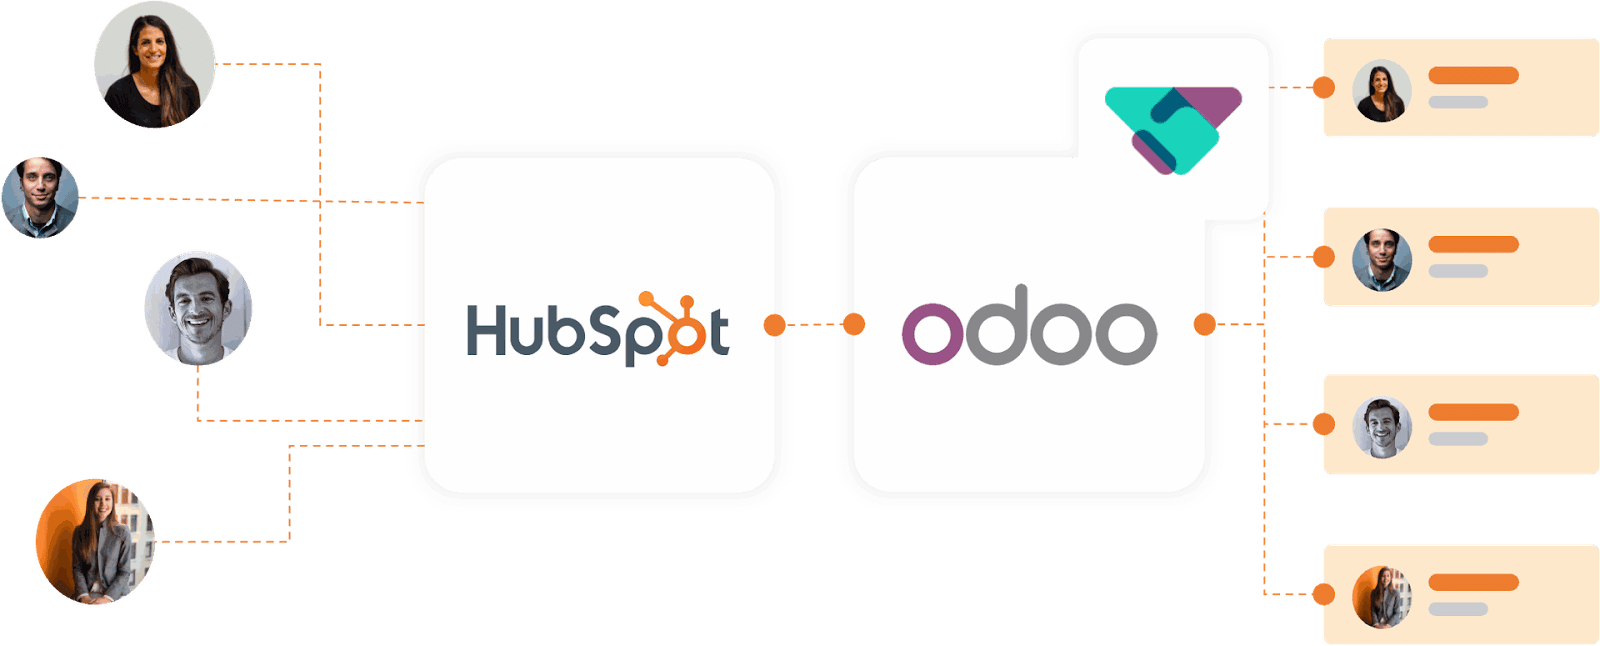 Odoo-Hubspot Integration in Odoo 17 CRM